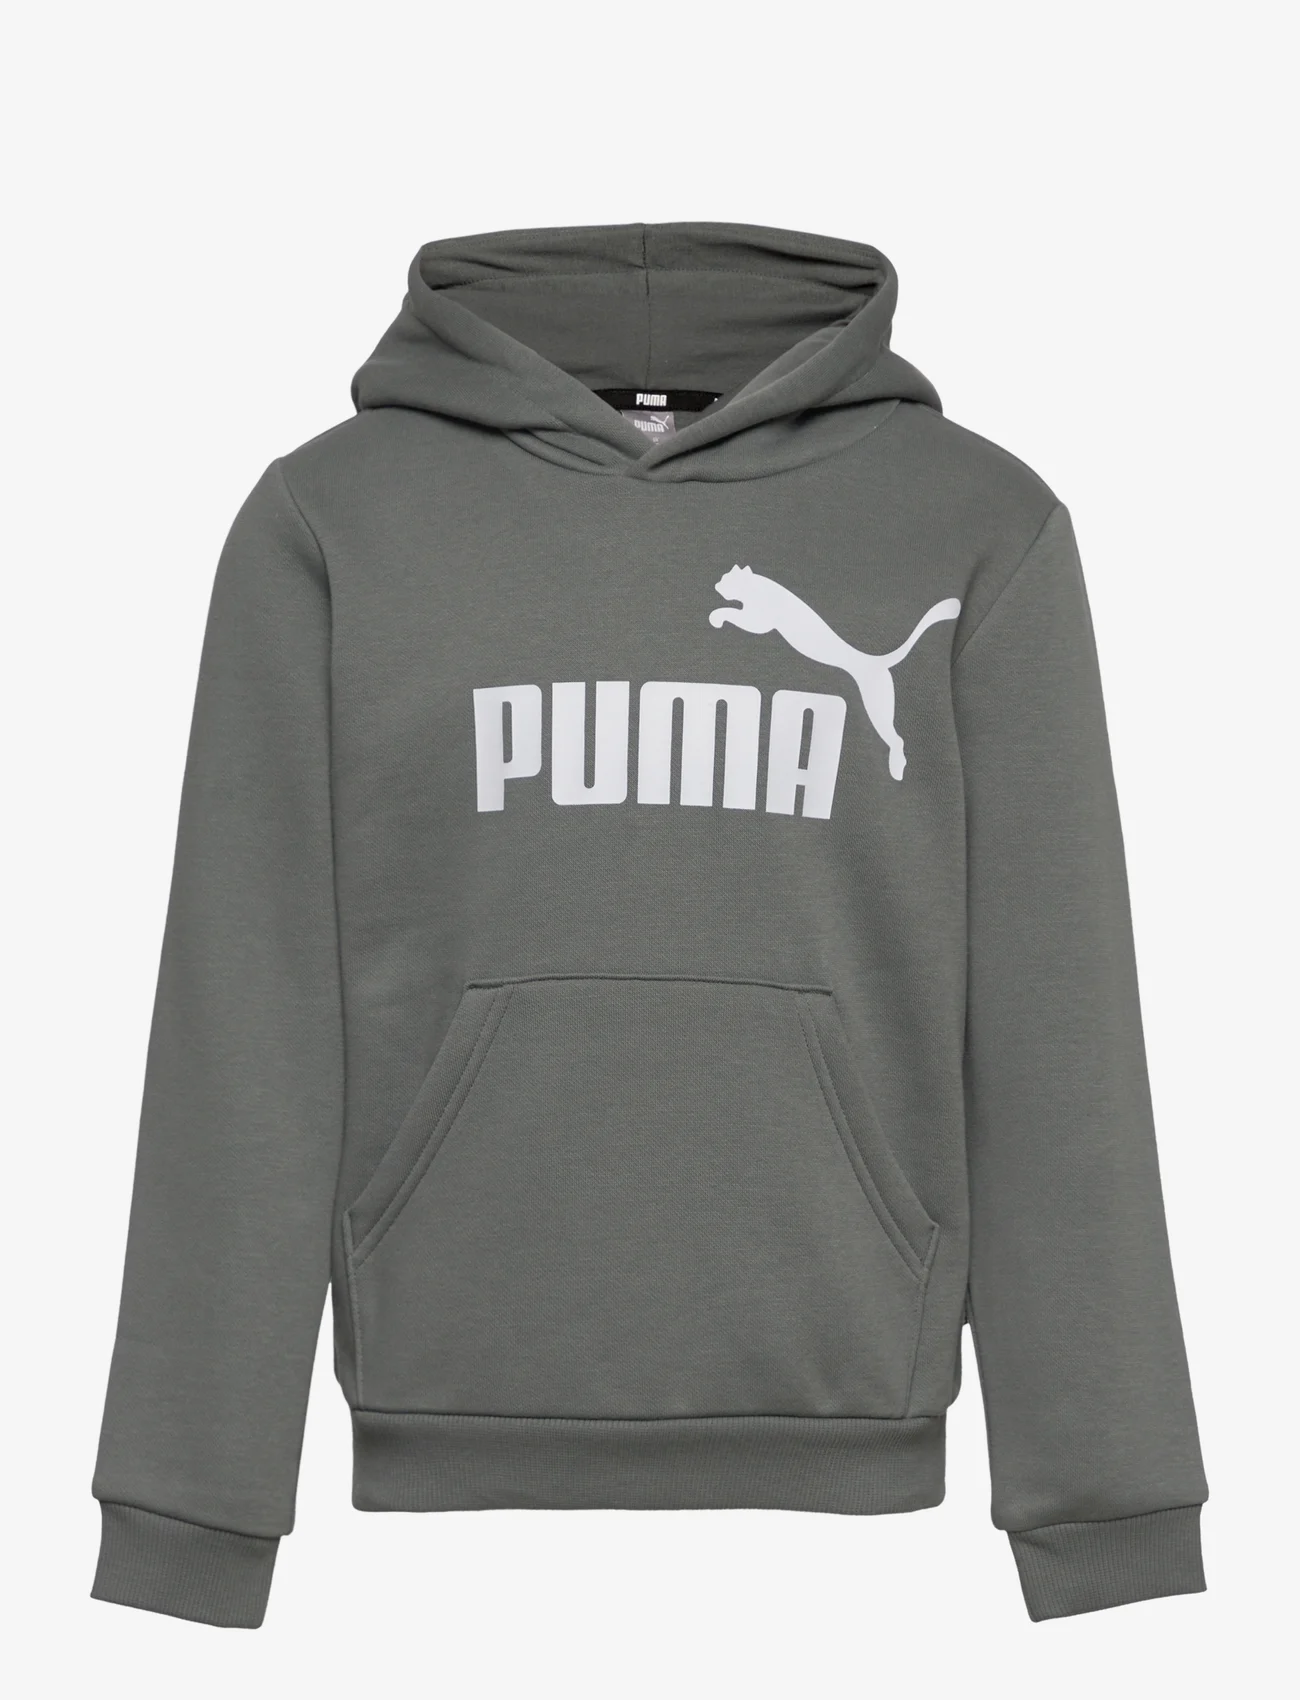 PUMA - ESS Big Logo Hoodie FL B - hoodies - mineral gray - 0